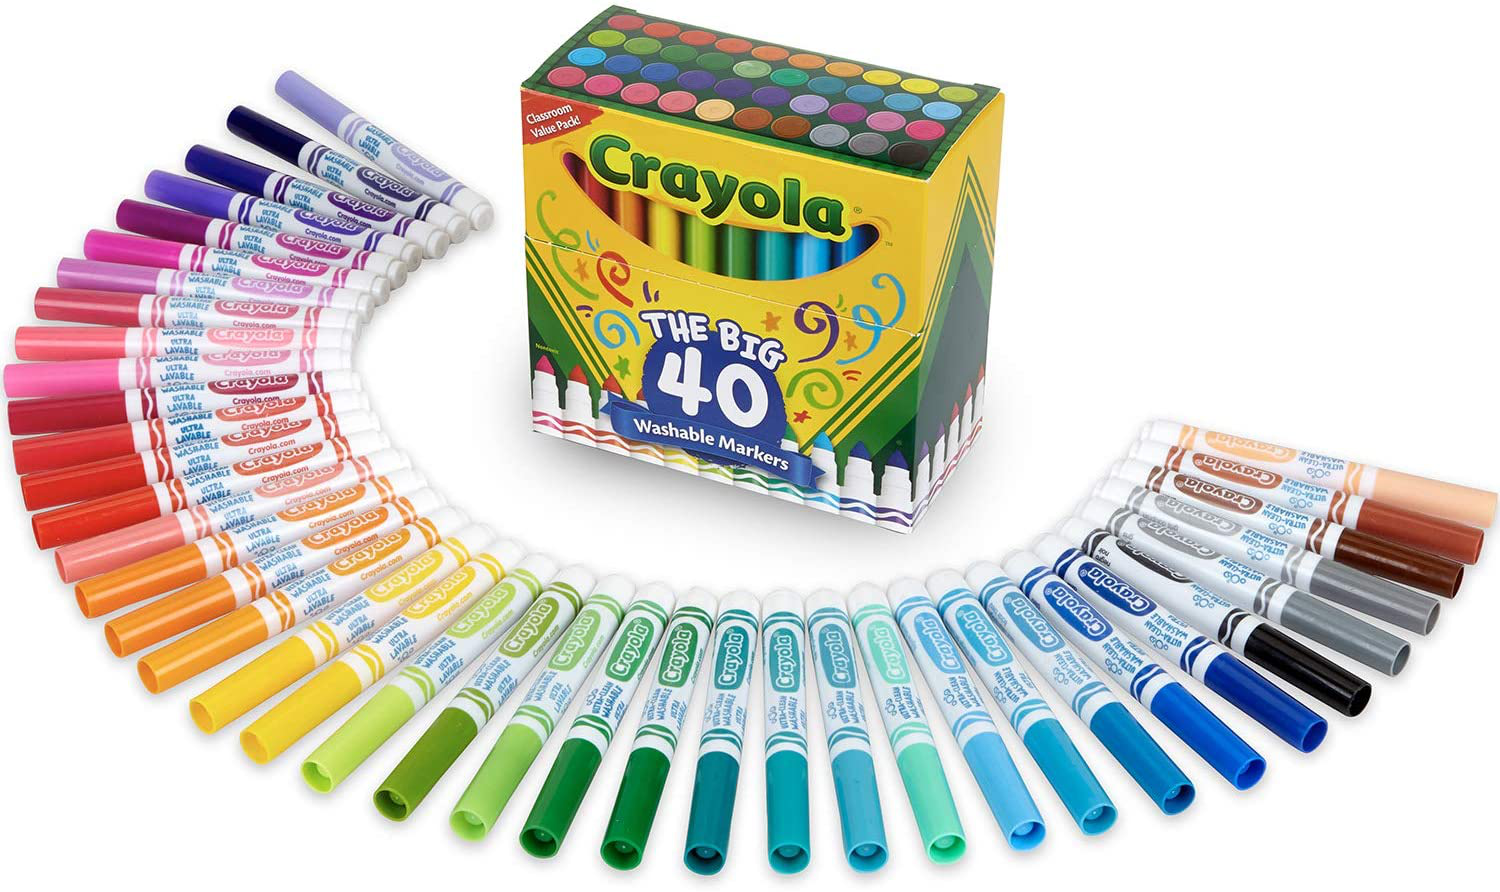 Crayola Adult Coloring Book + 40 Fine Line Marker Set for $5.72 (reg.  $29.99) - Kids Activities, Saving Money, Home Management